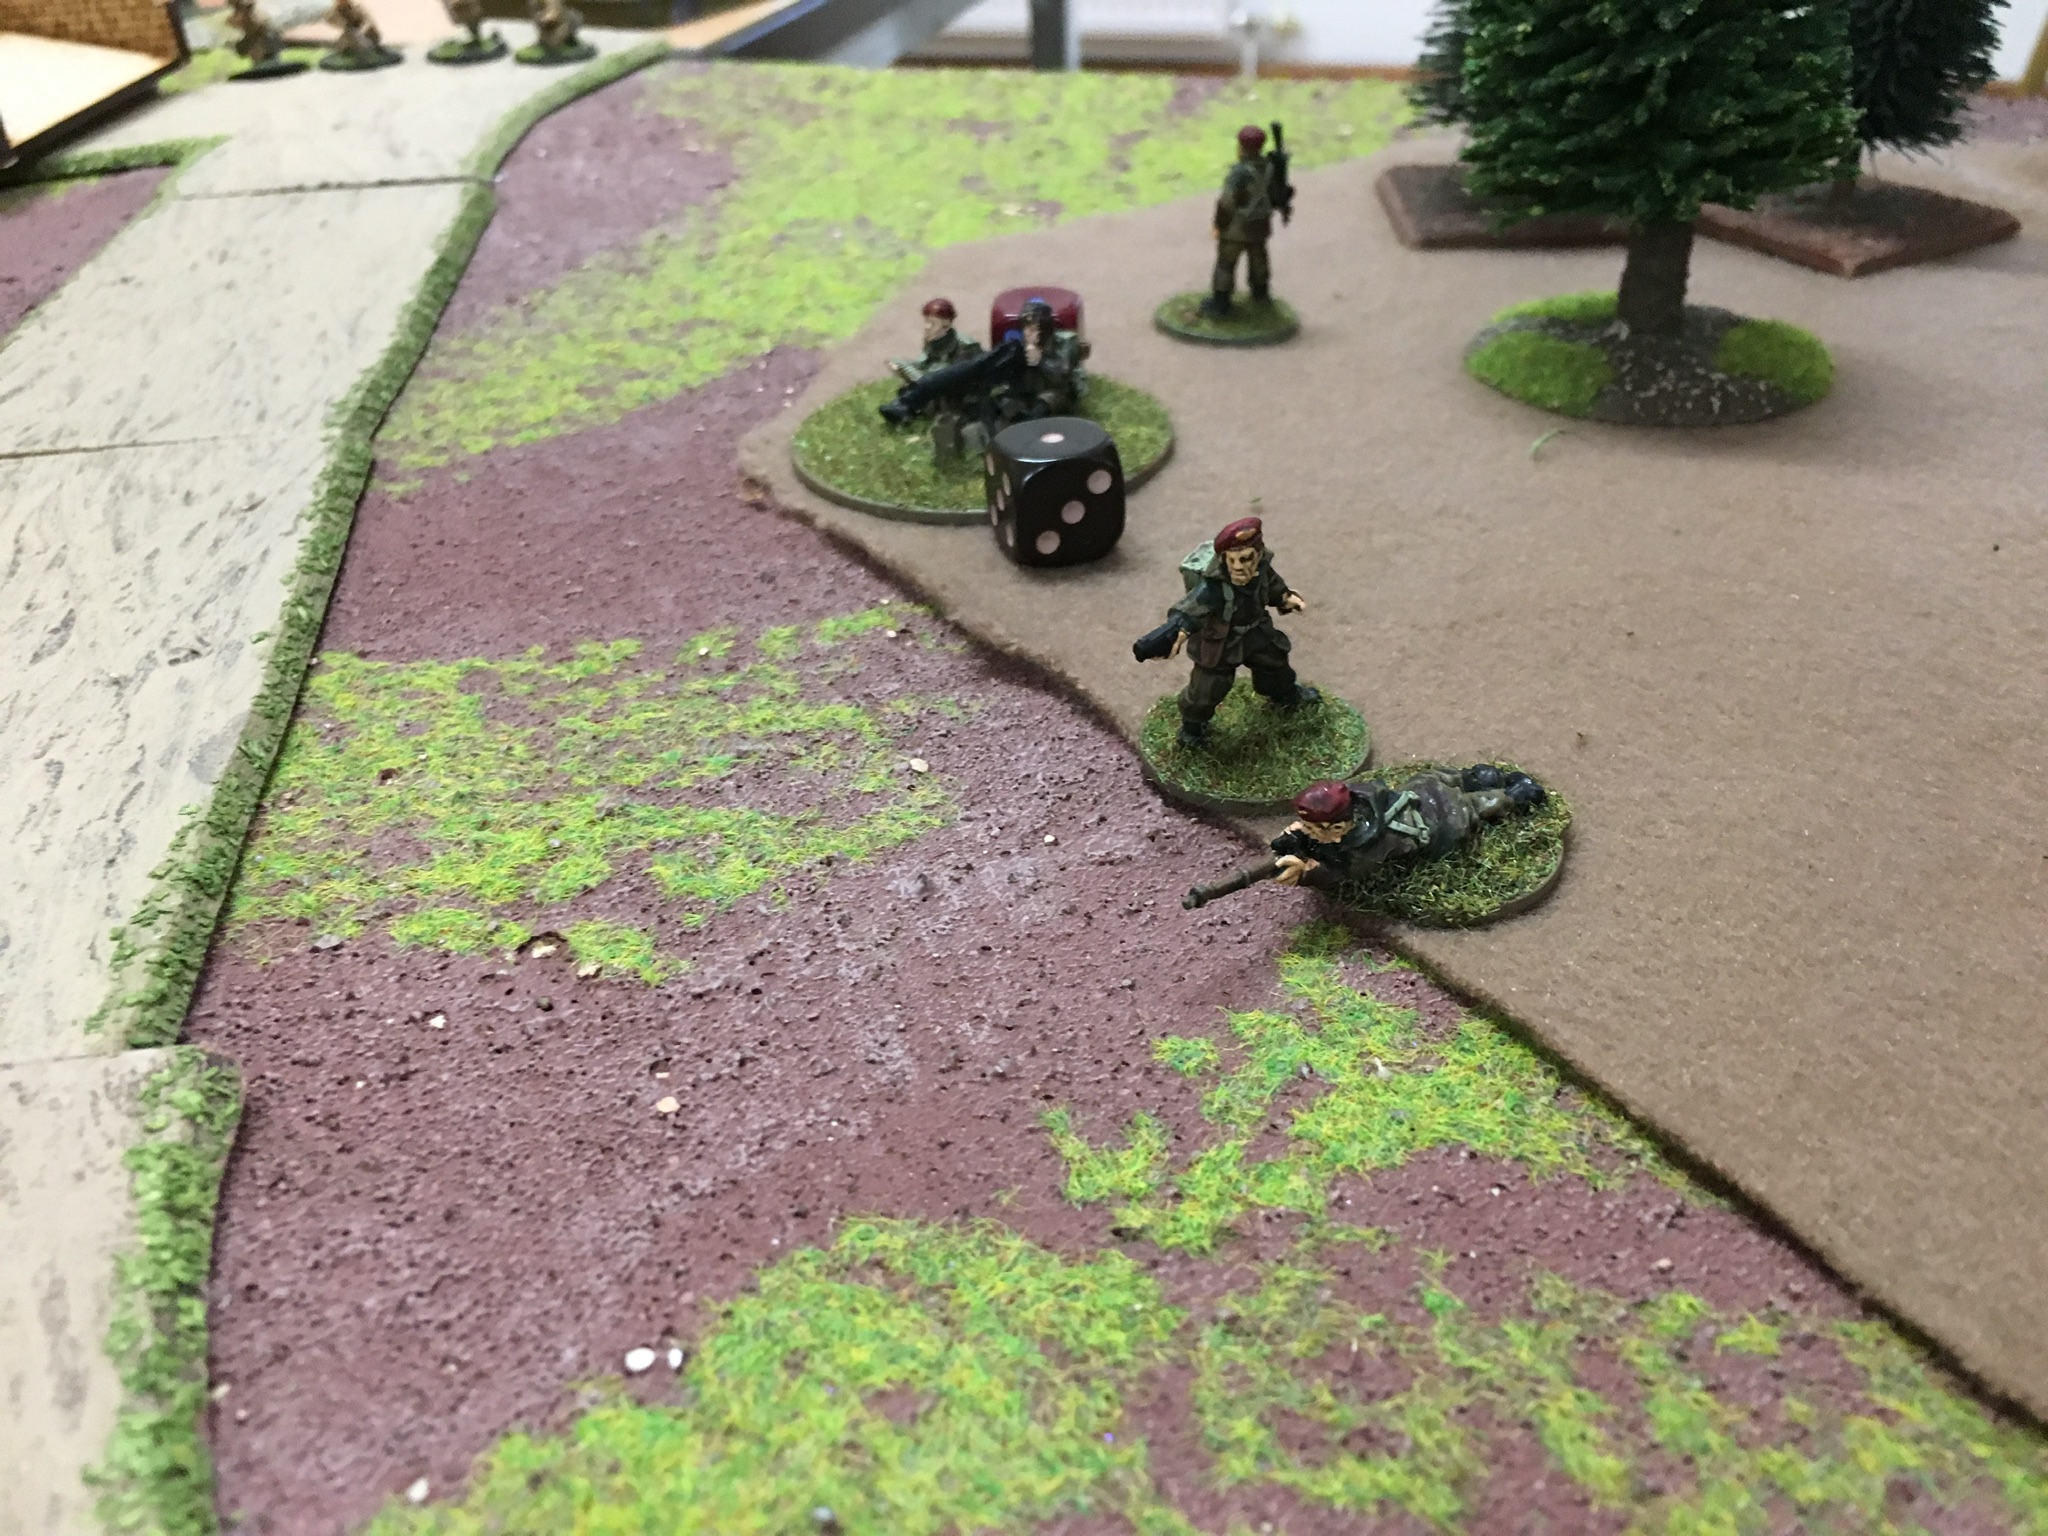 German grenadier’s versus The Red Devils in a fierce infantry engagement